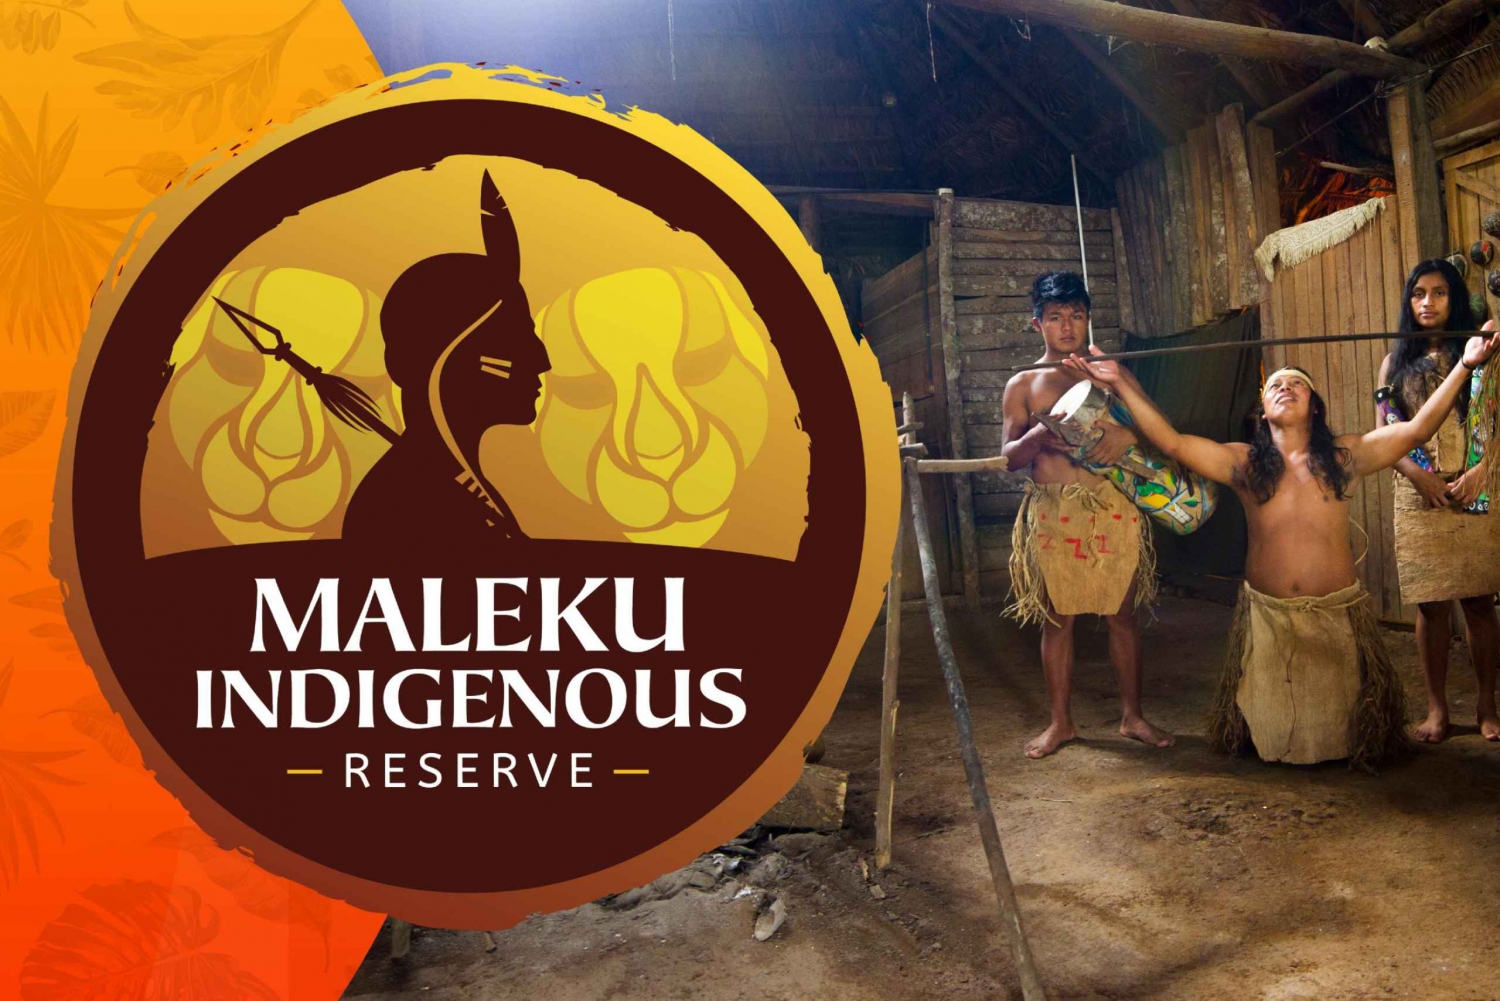 La Fortuna: visita alla riserva indigena Maleku per piccoli gruppi